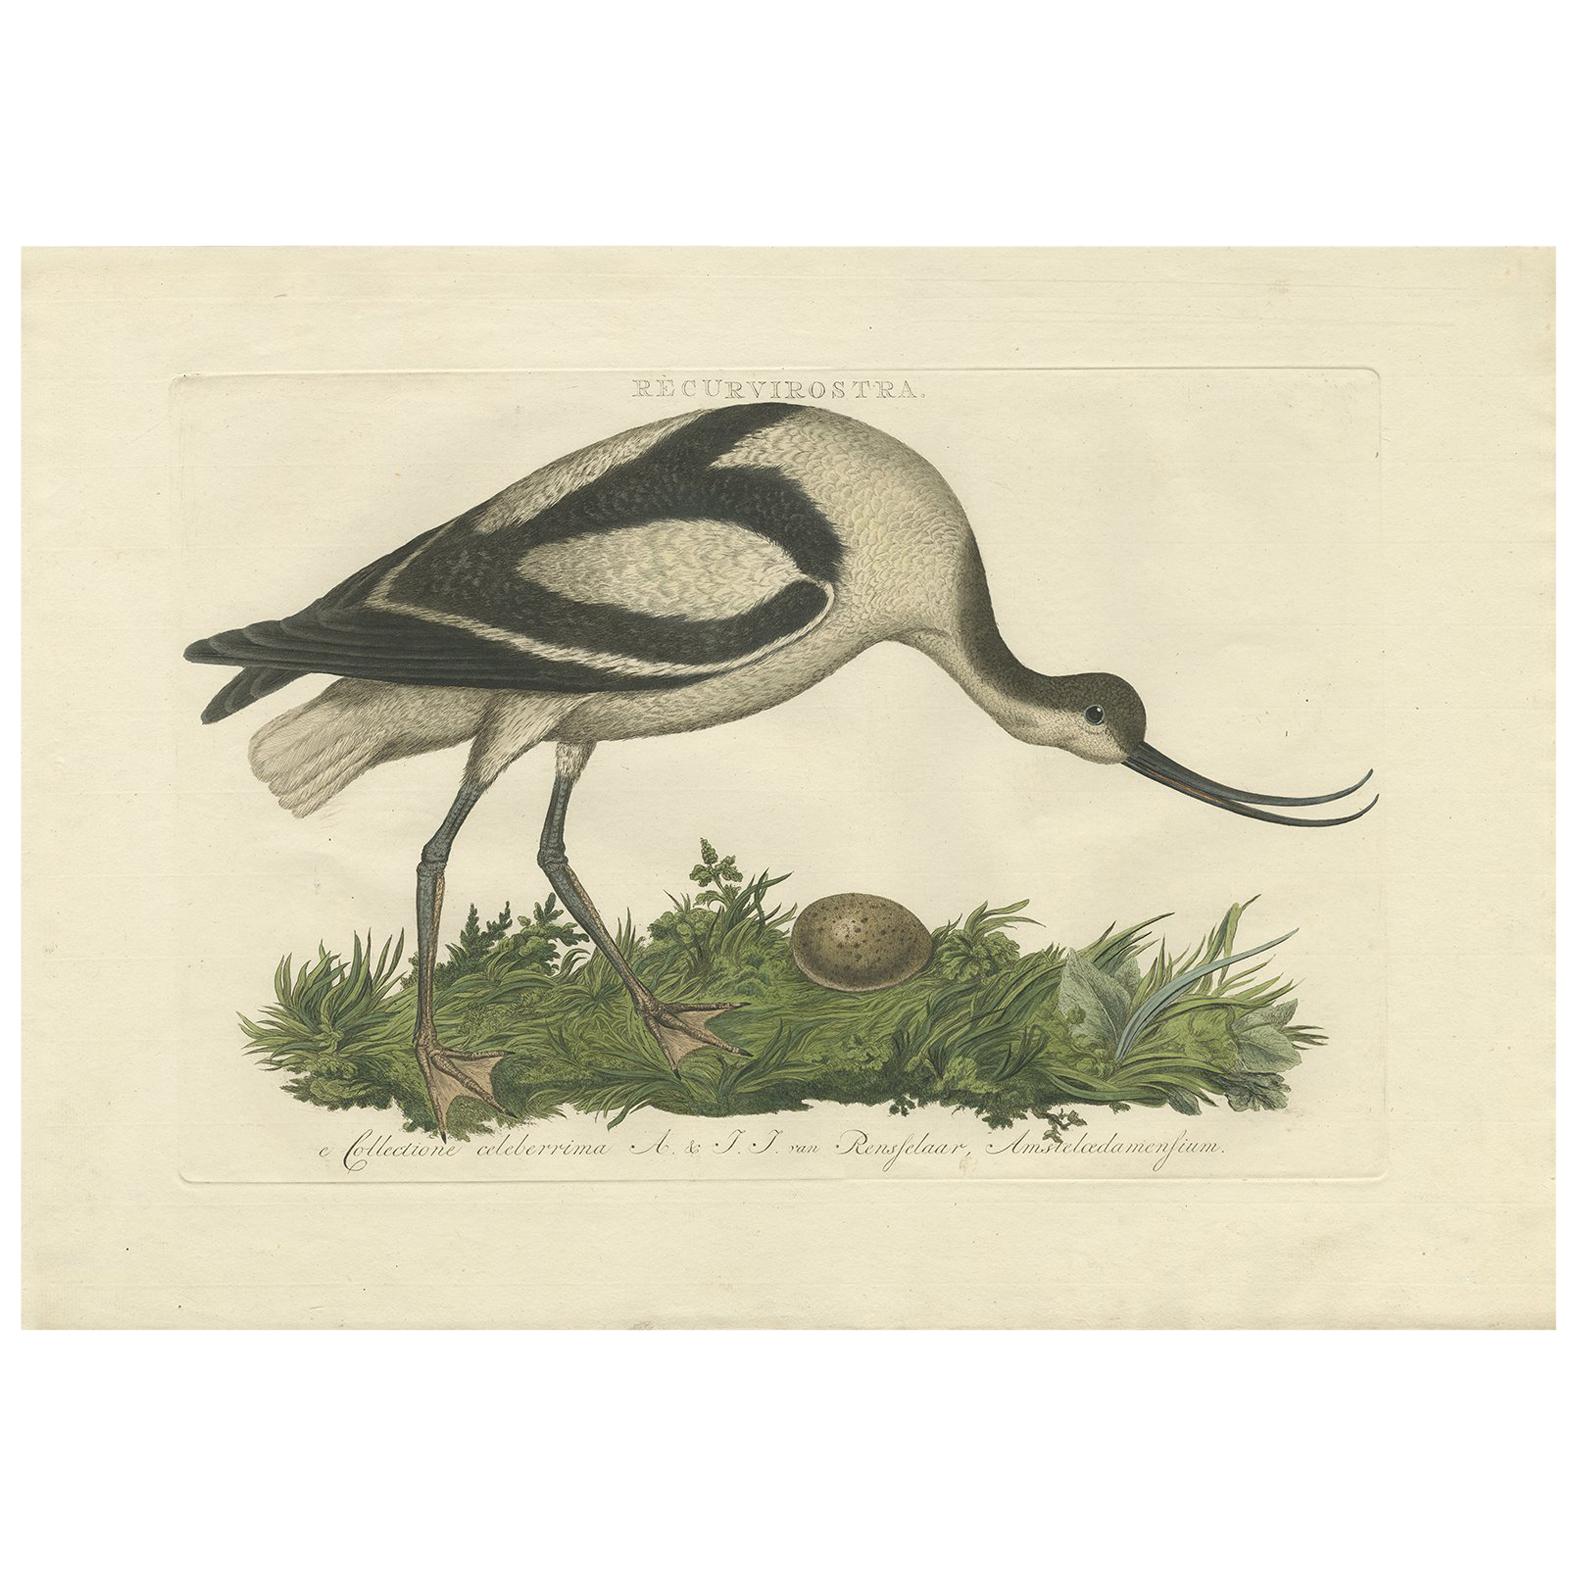 Antique Bird Print of the Pied Avocet by Sepp & Nozeman, 1770